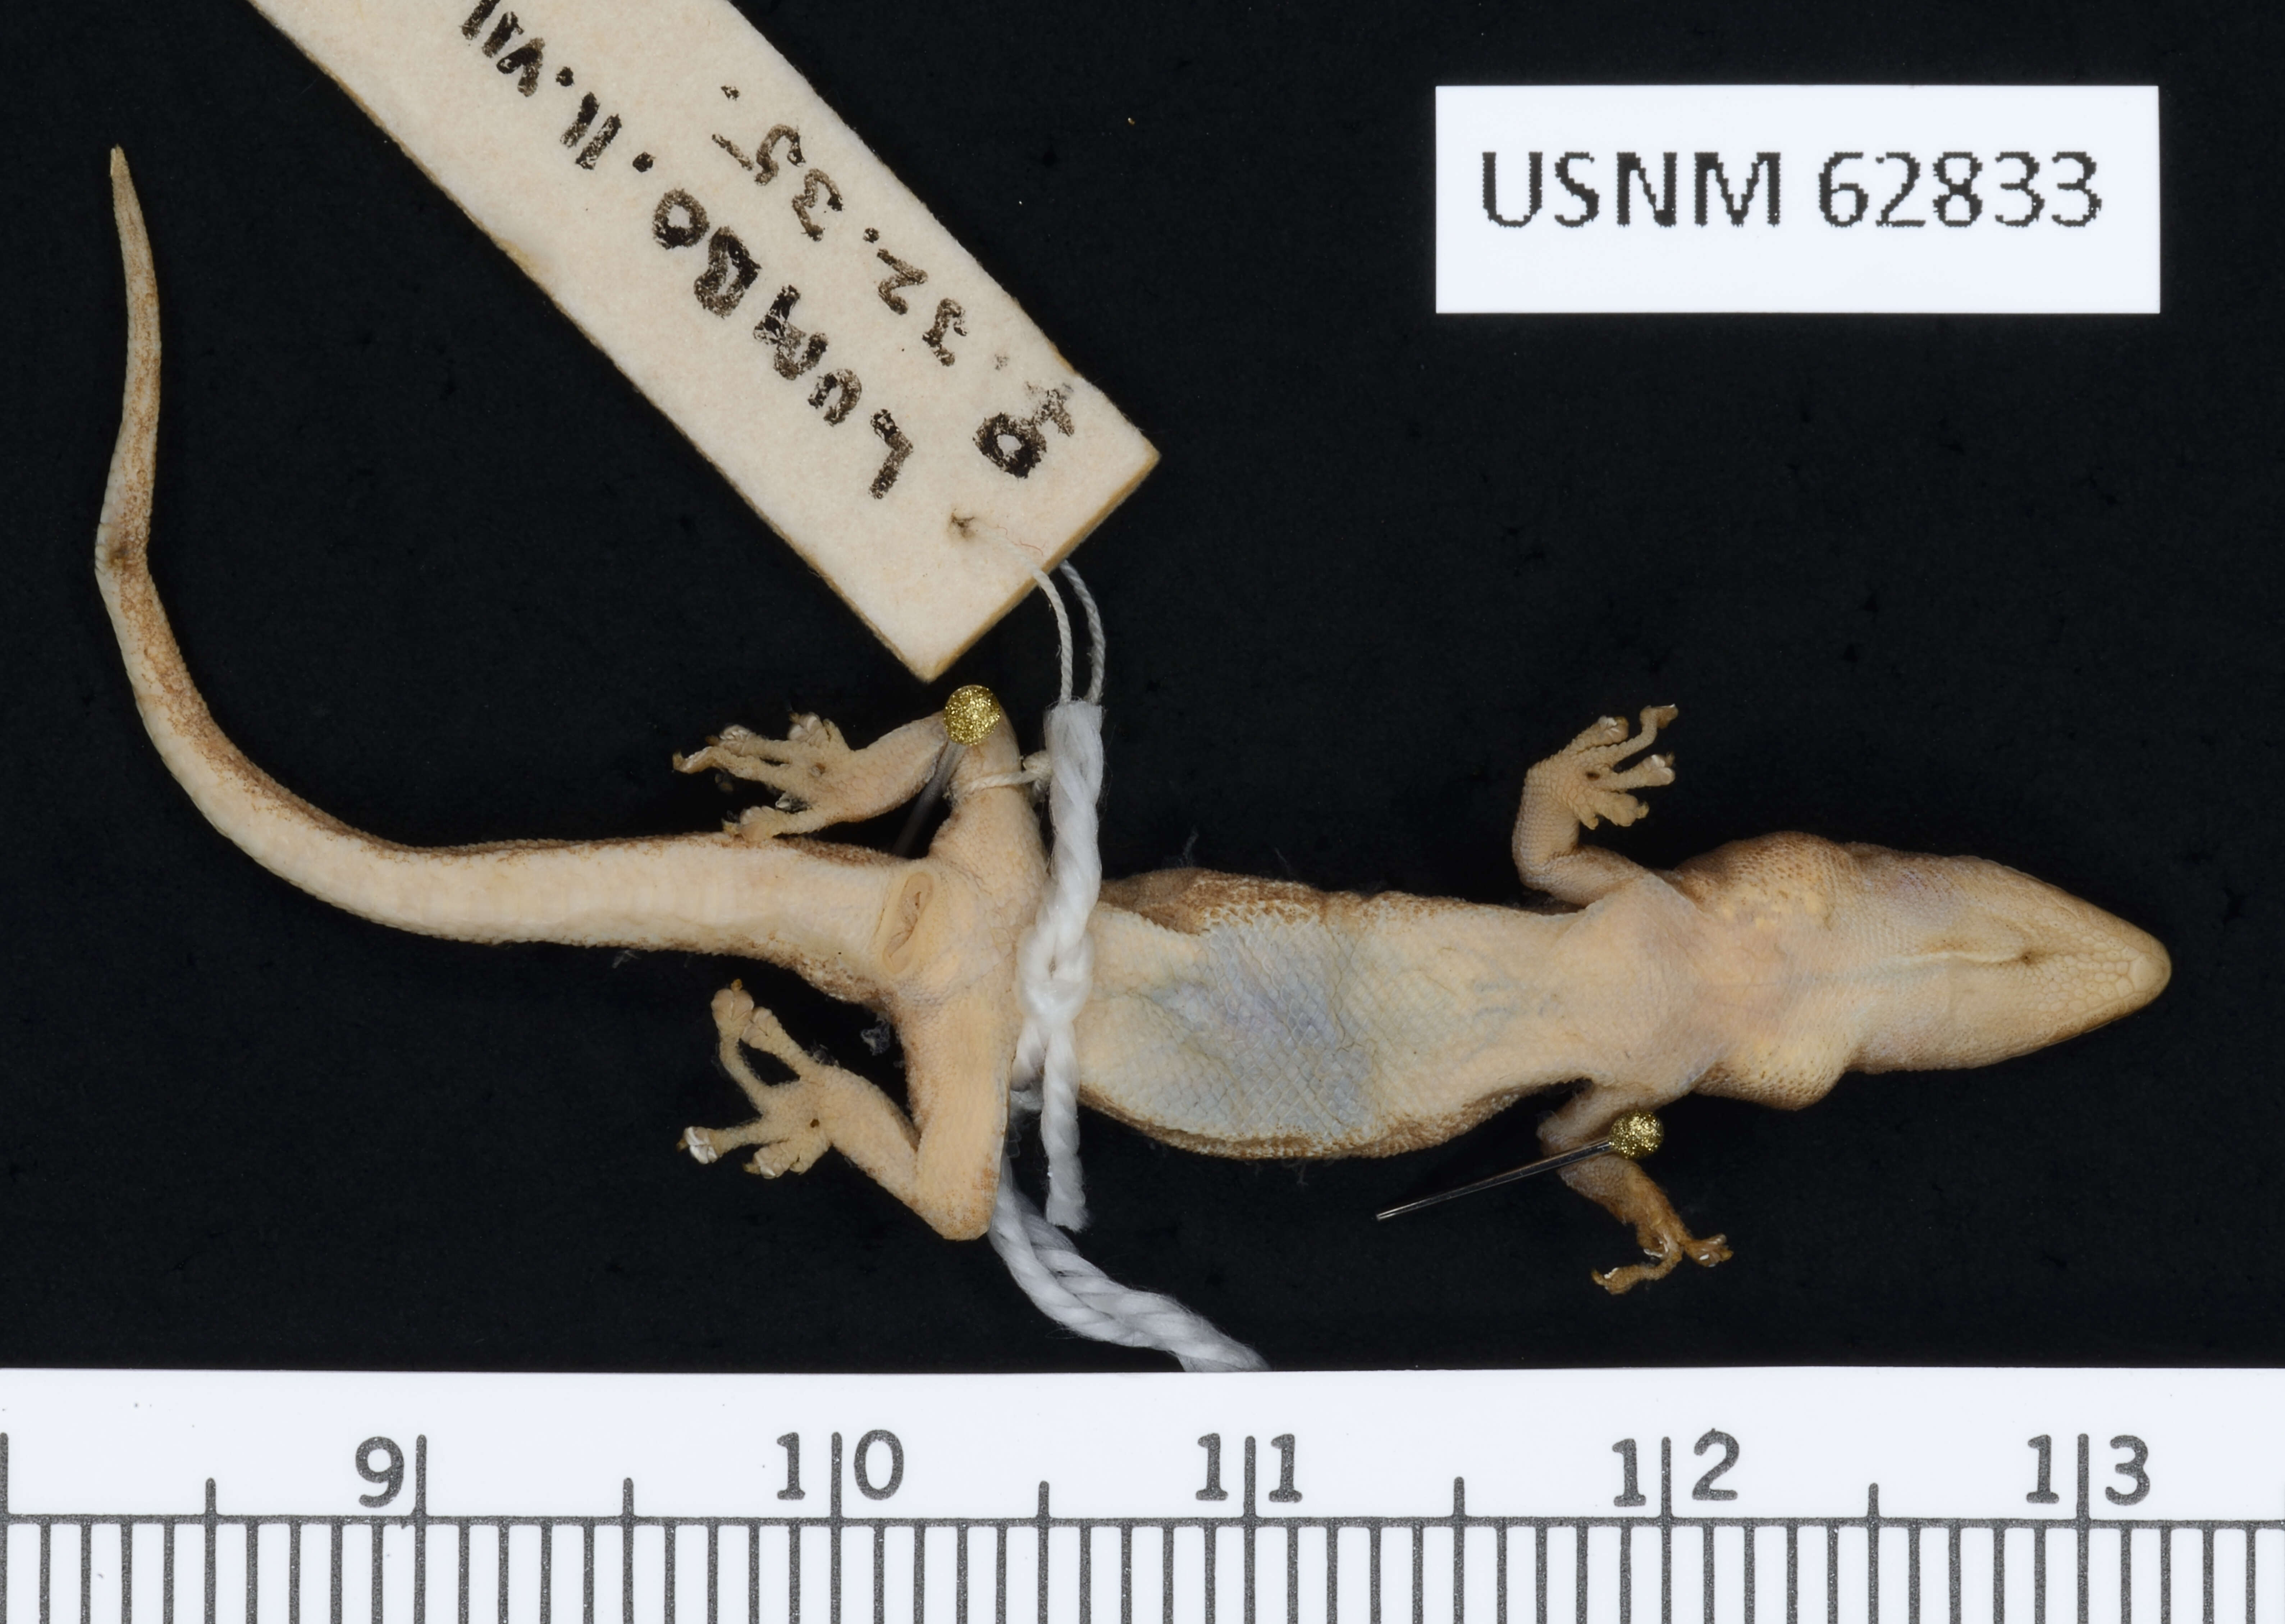 Lygodactylus grotei Sternfeld 1911 resmi